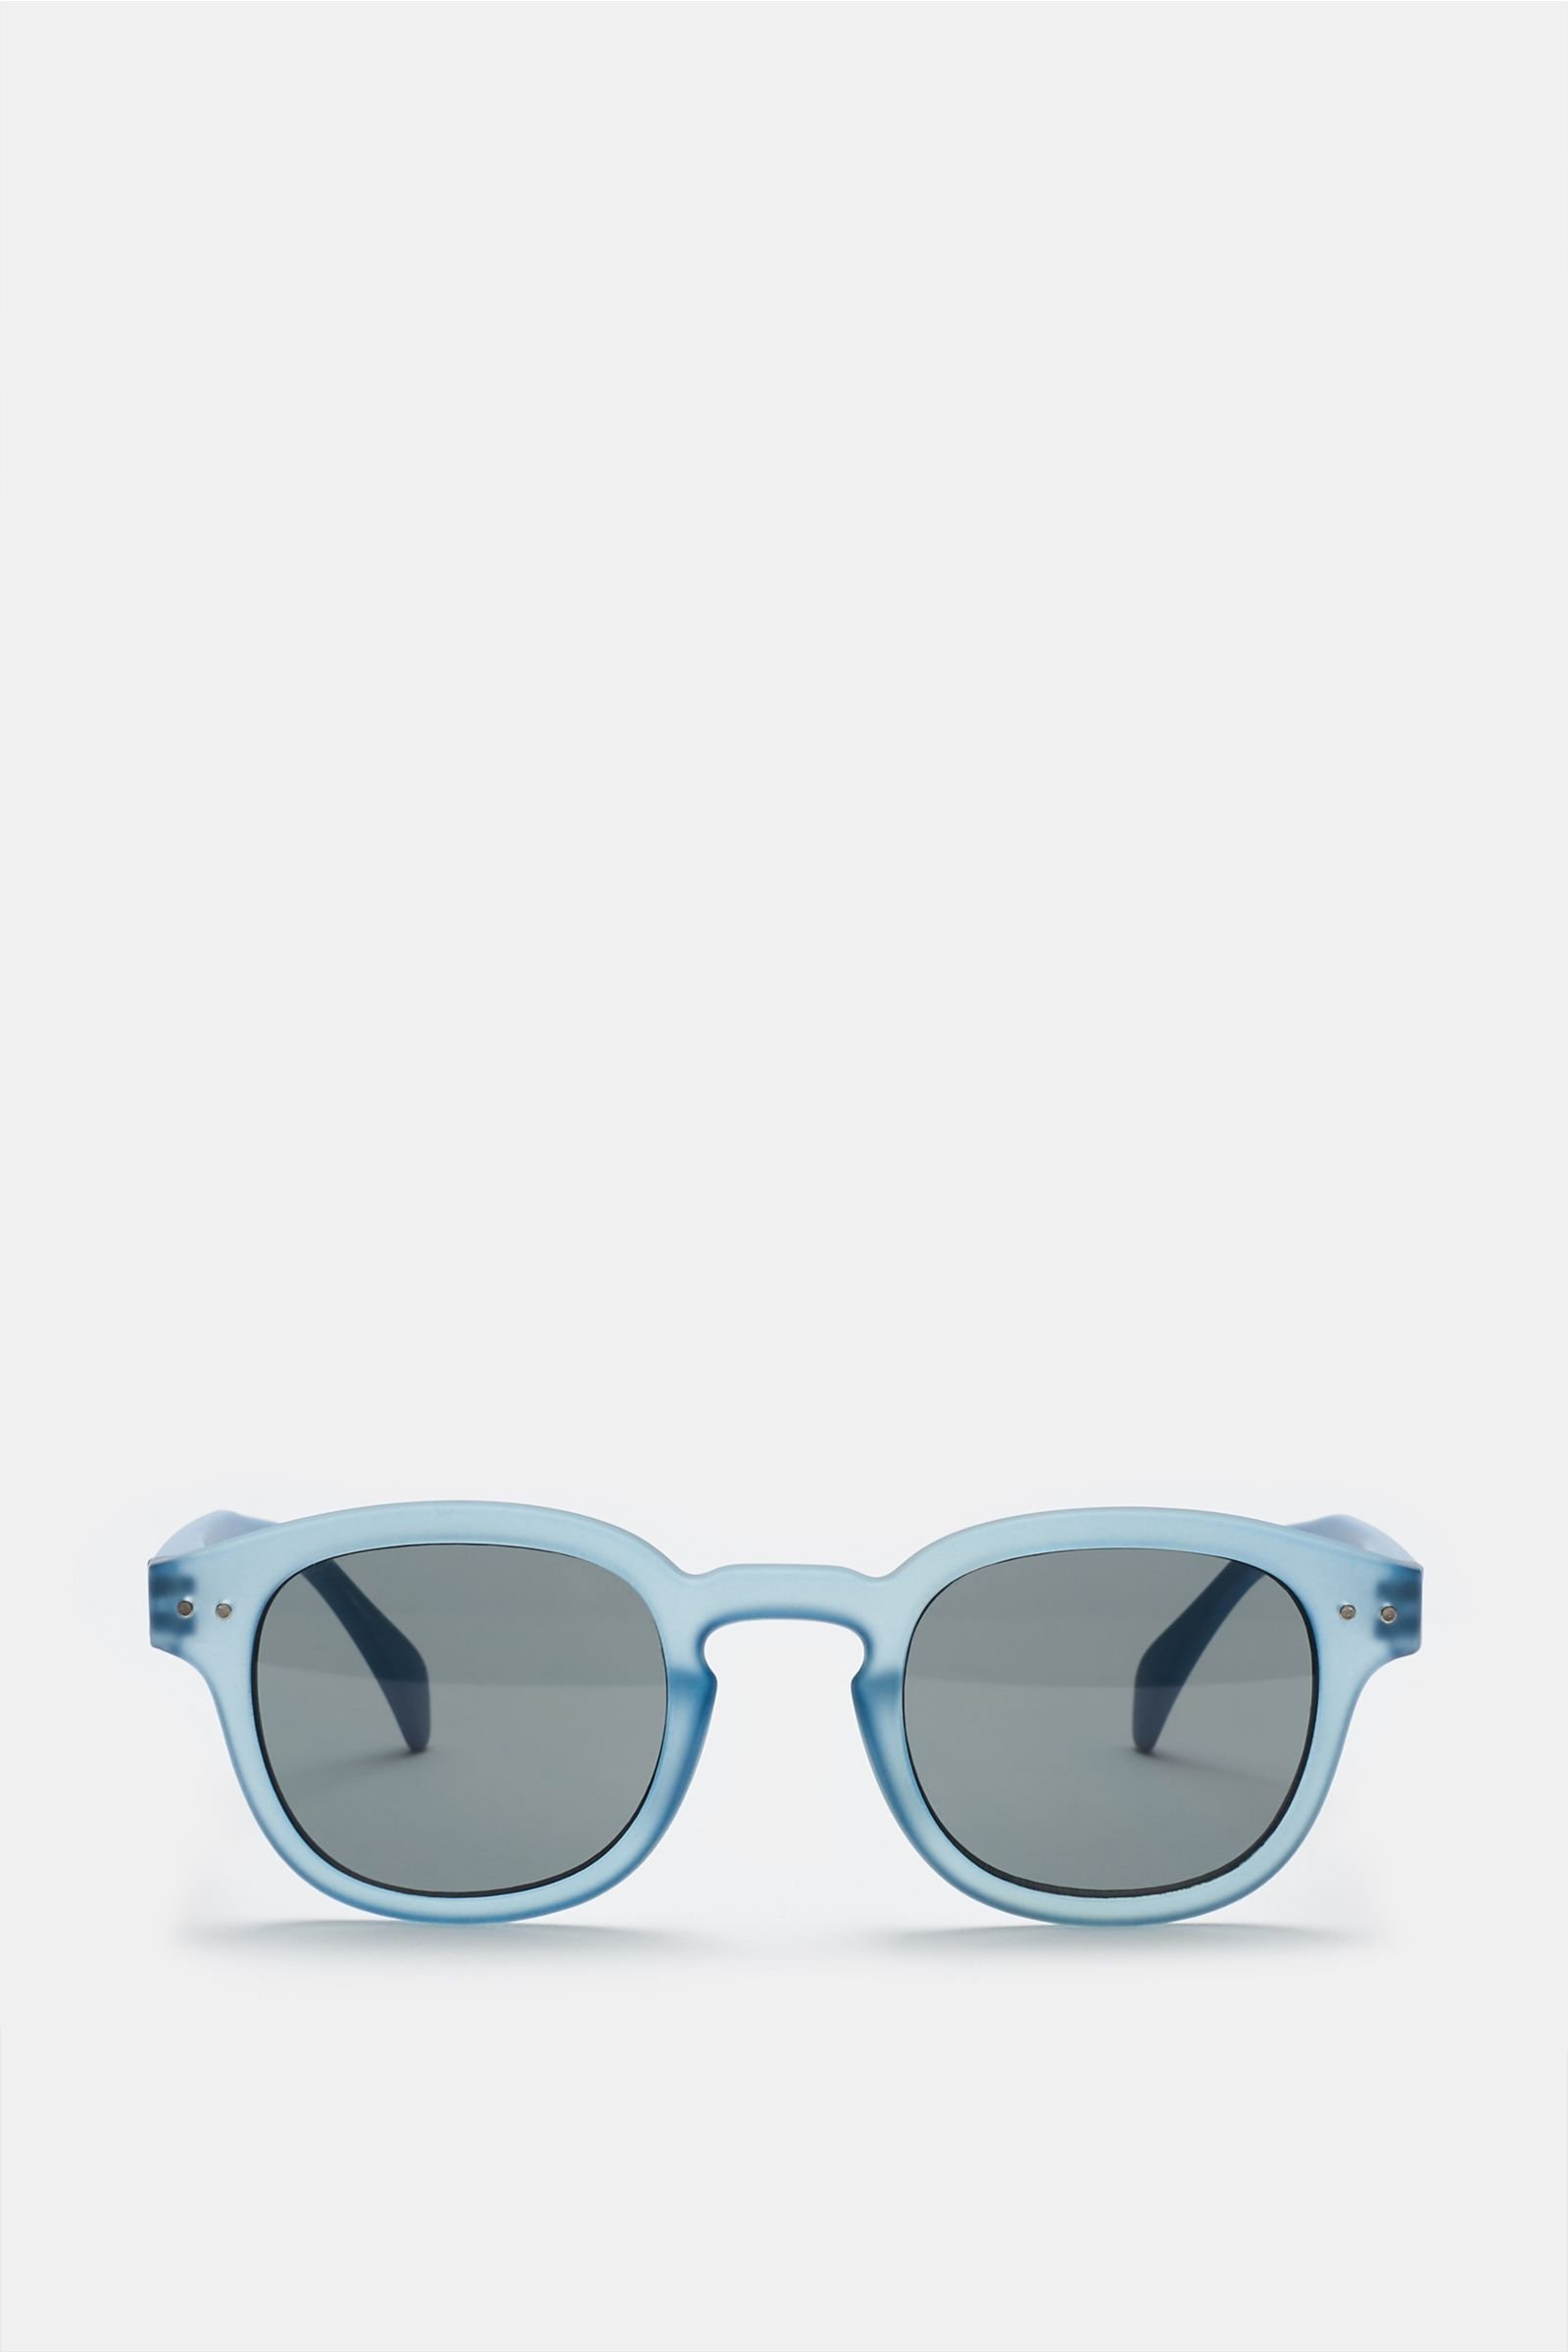 Sunglasses '#C Sun' smoky blue/dark grey